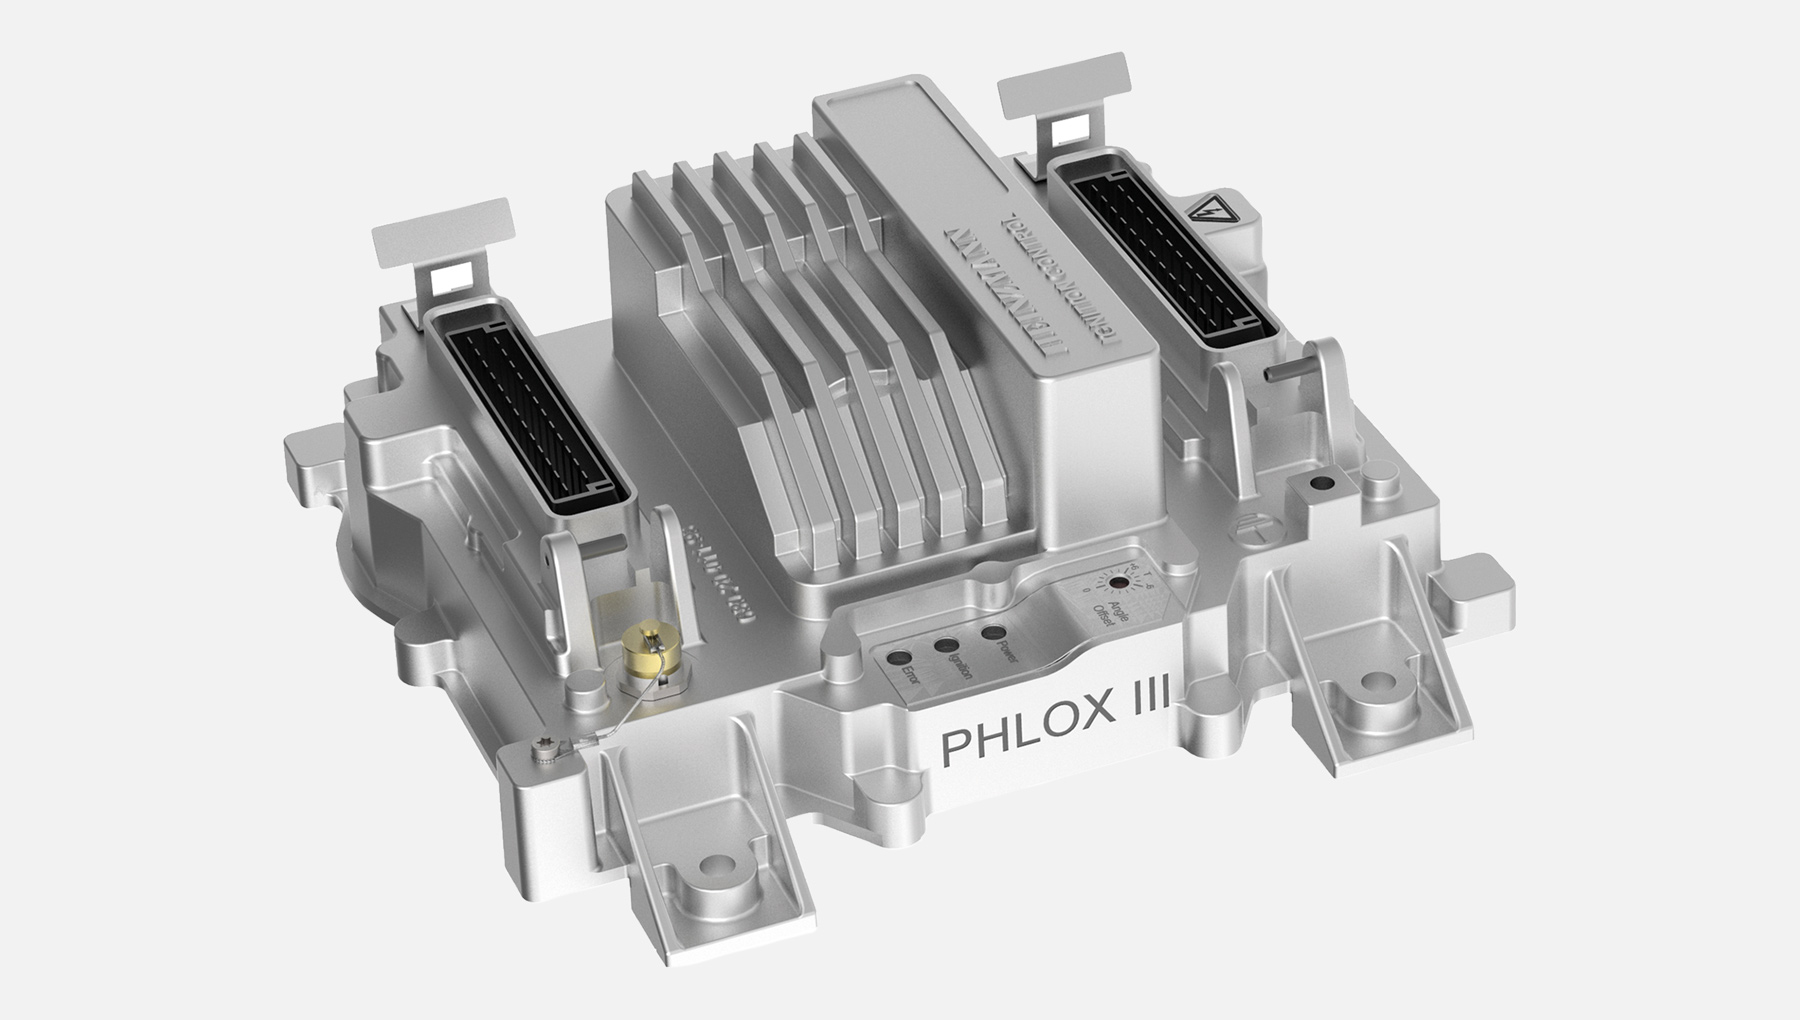 PHLOX III ignition controller